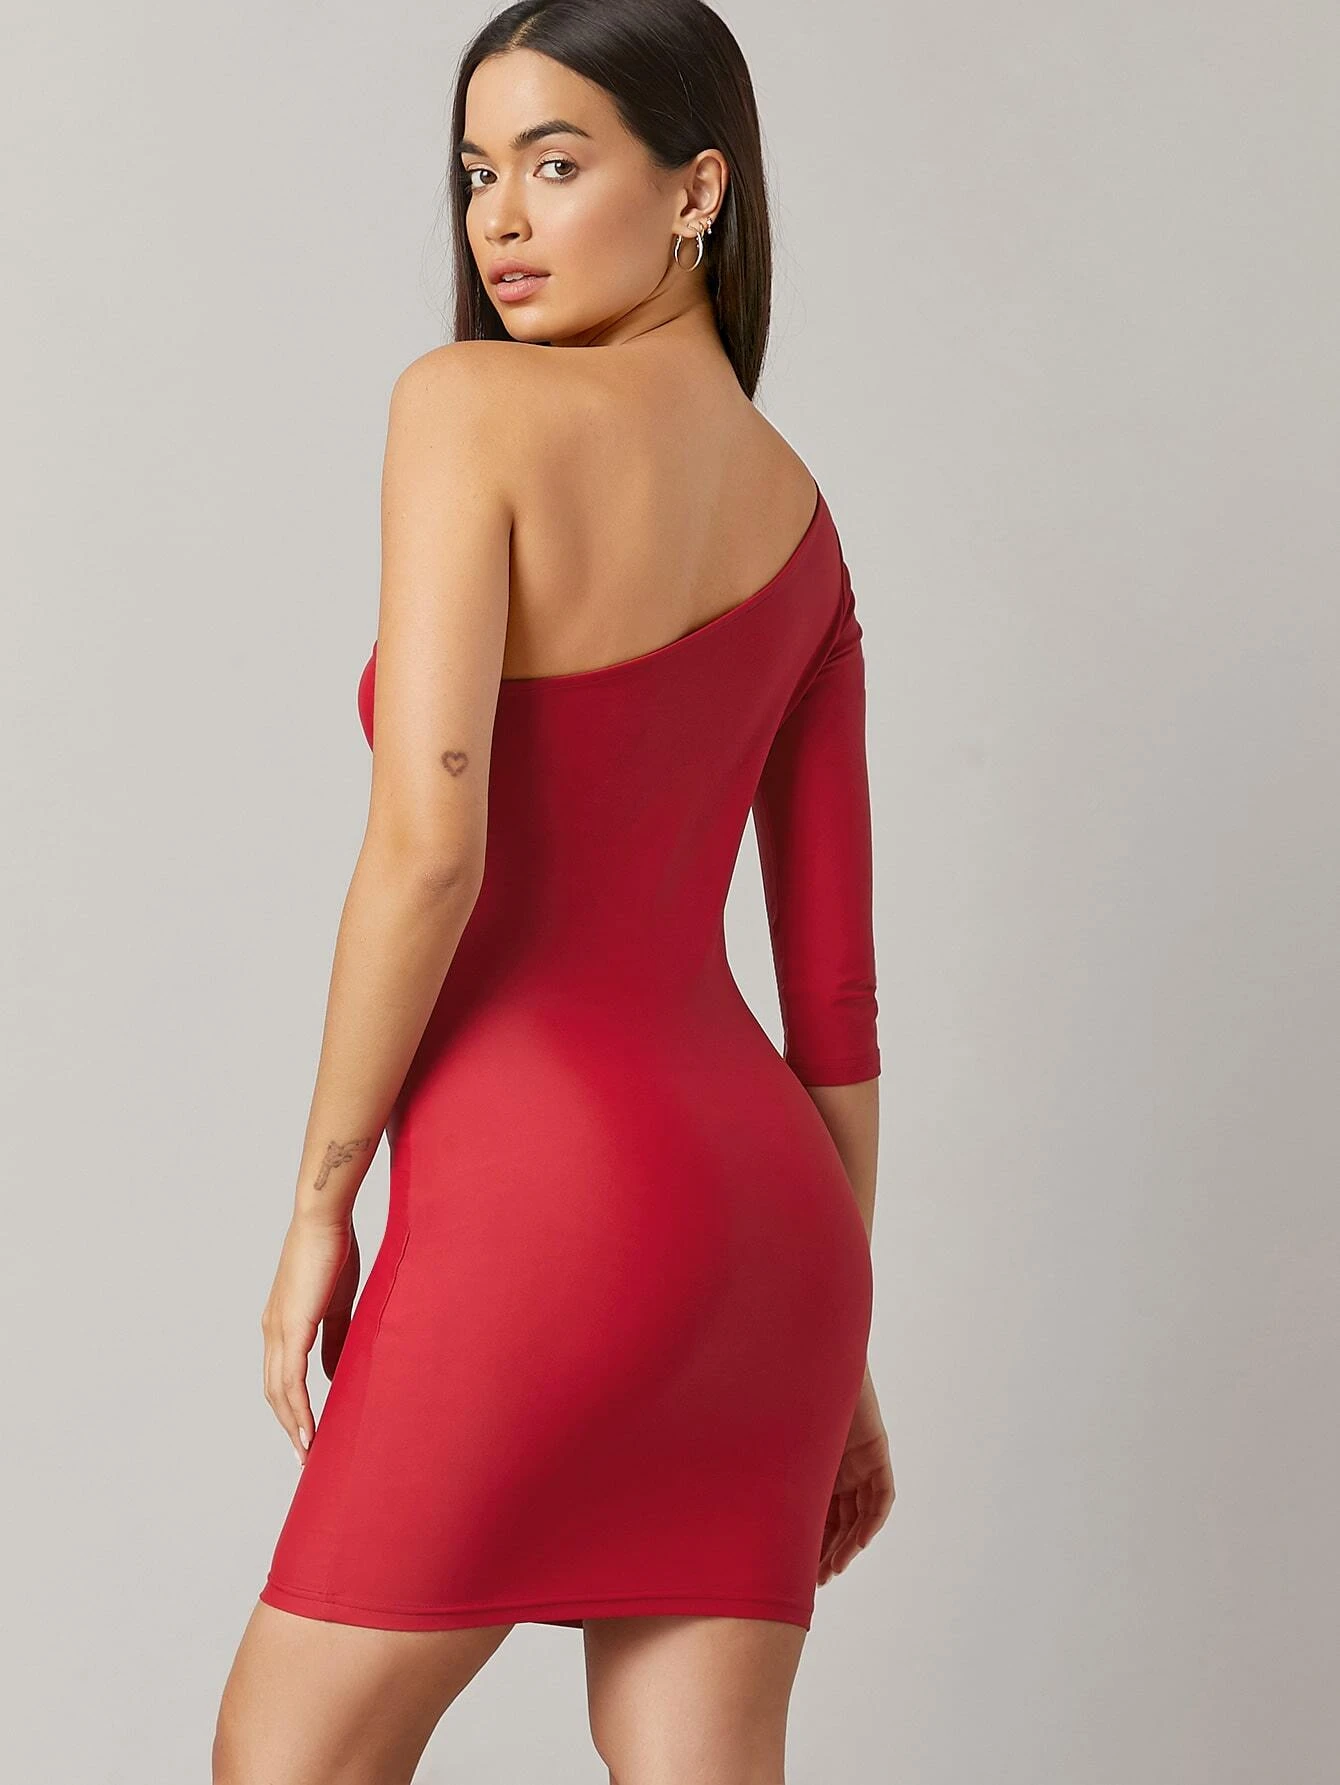 london belly Women Bodycon Red Dress - Buy london belly Women Bodycon Red  Dress Online at Best Prices in India | Flipkart.com